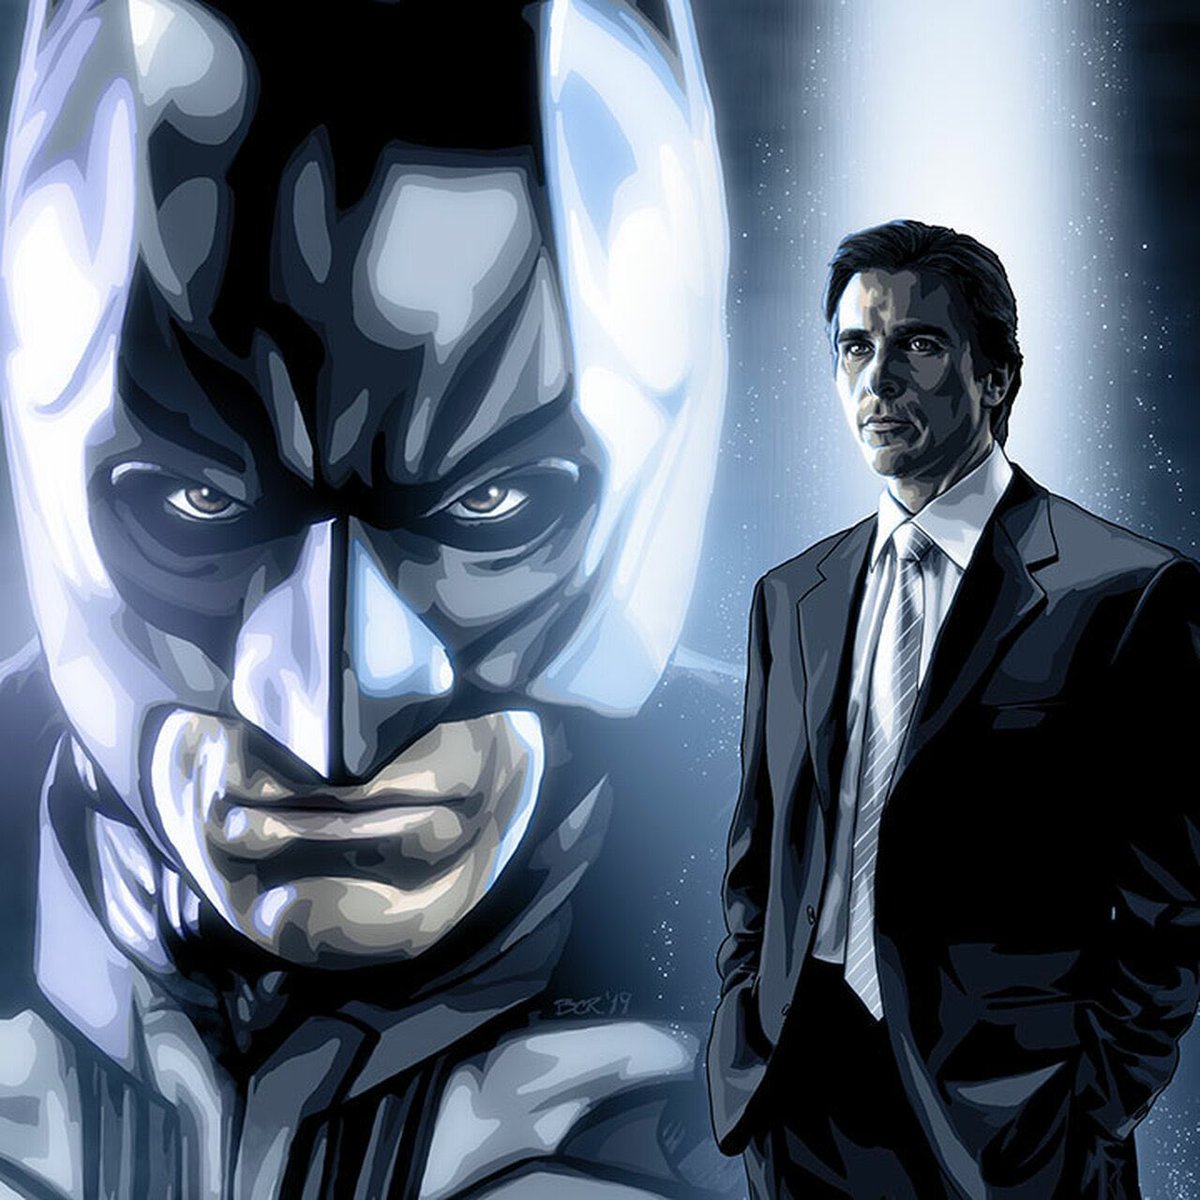 Christian Bale Batman
The Dark Knight 
Artwork by Brian C. Roll
#Batman